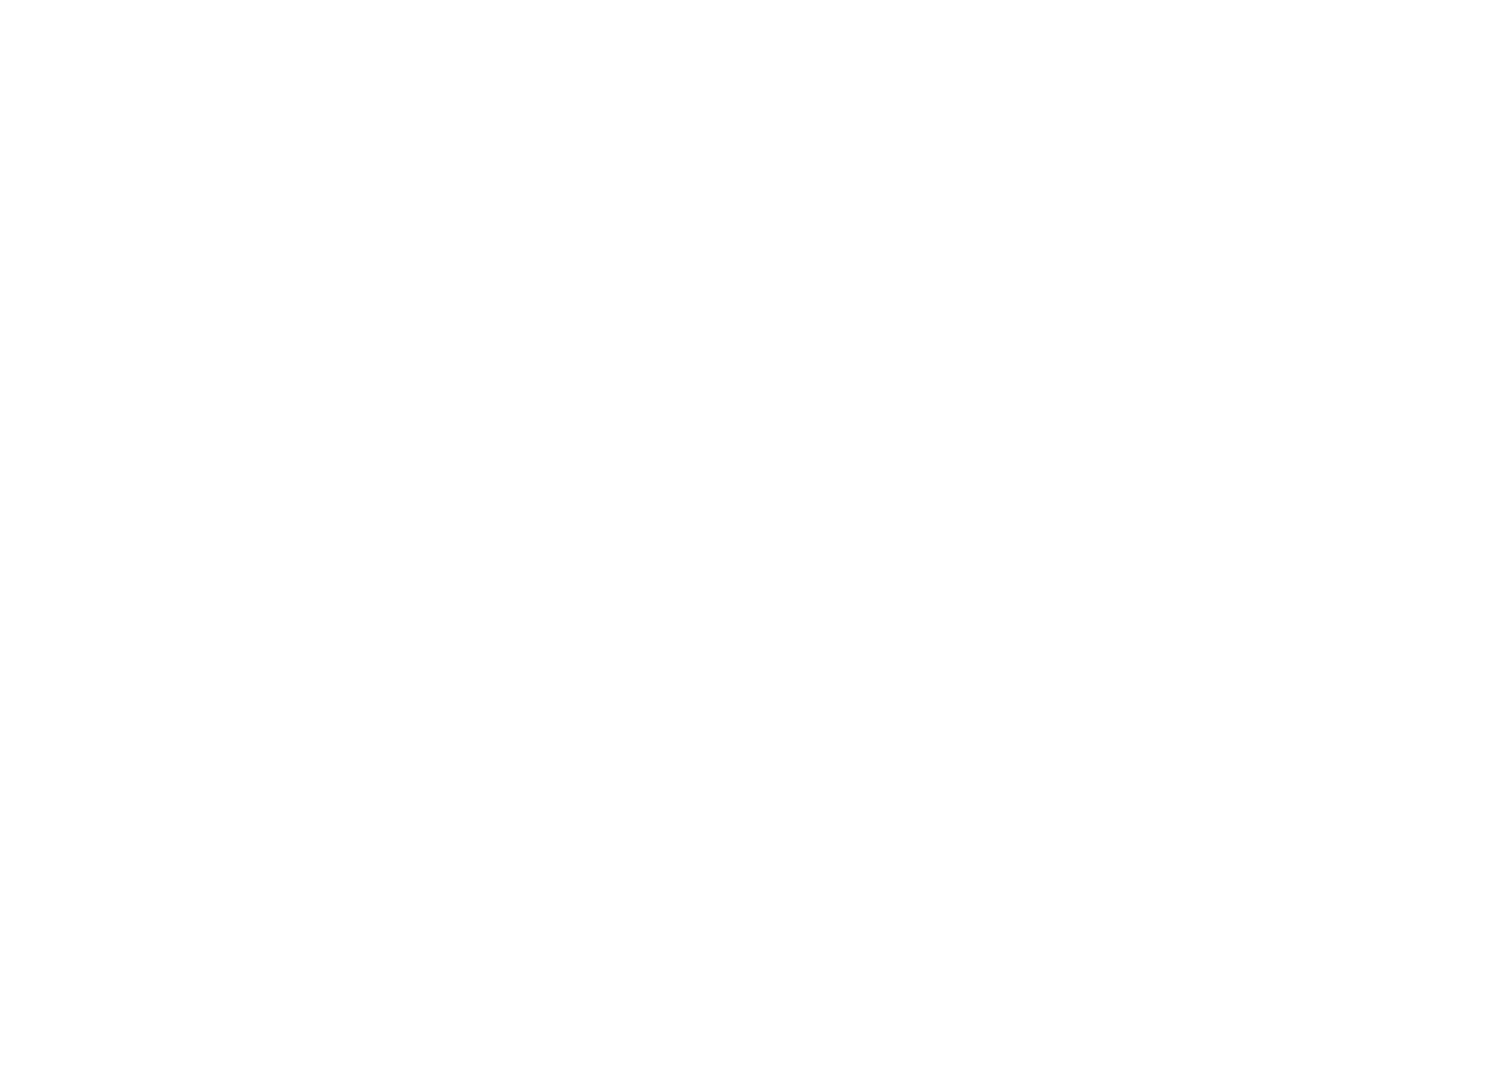 The Chabad Torah Center